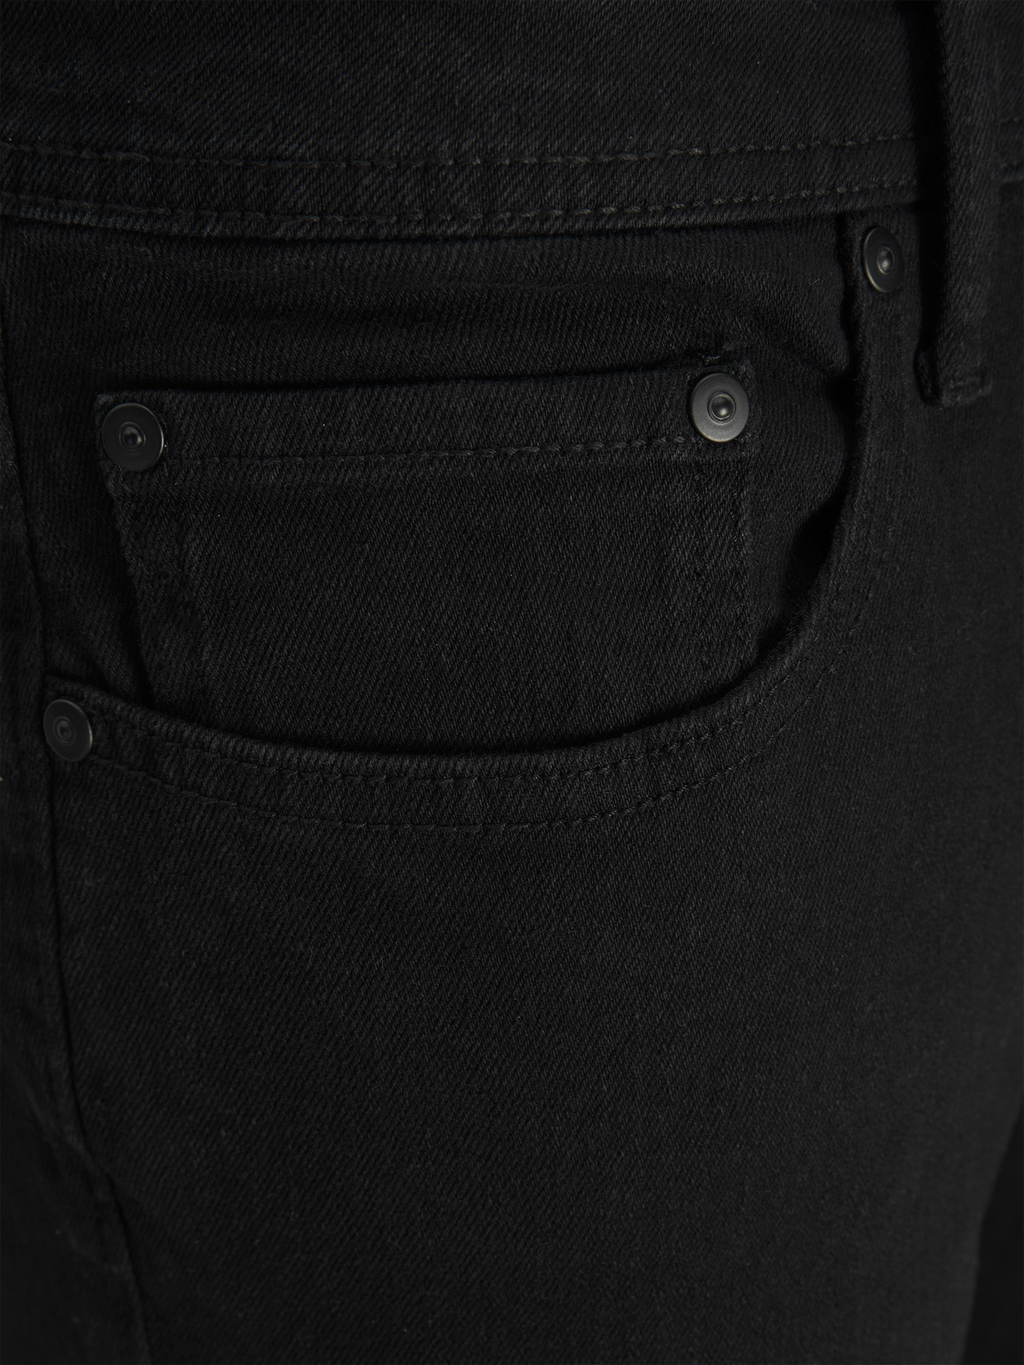 De Originale Performance Jeans (Regular) - Black Denim